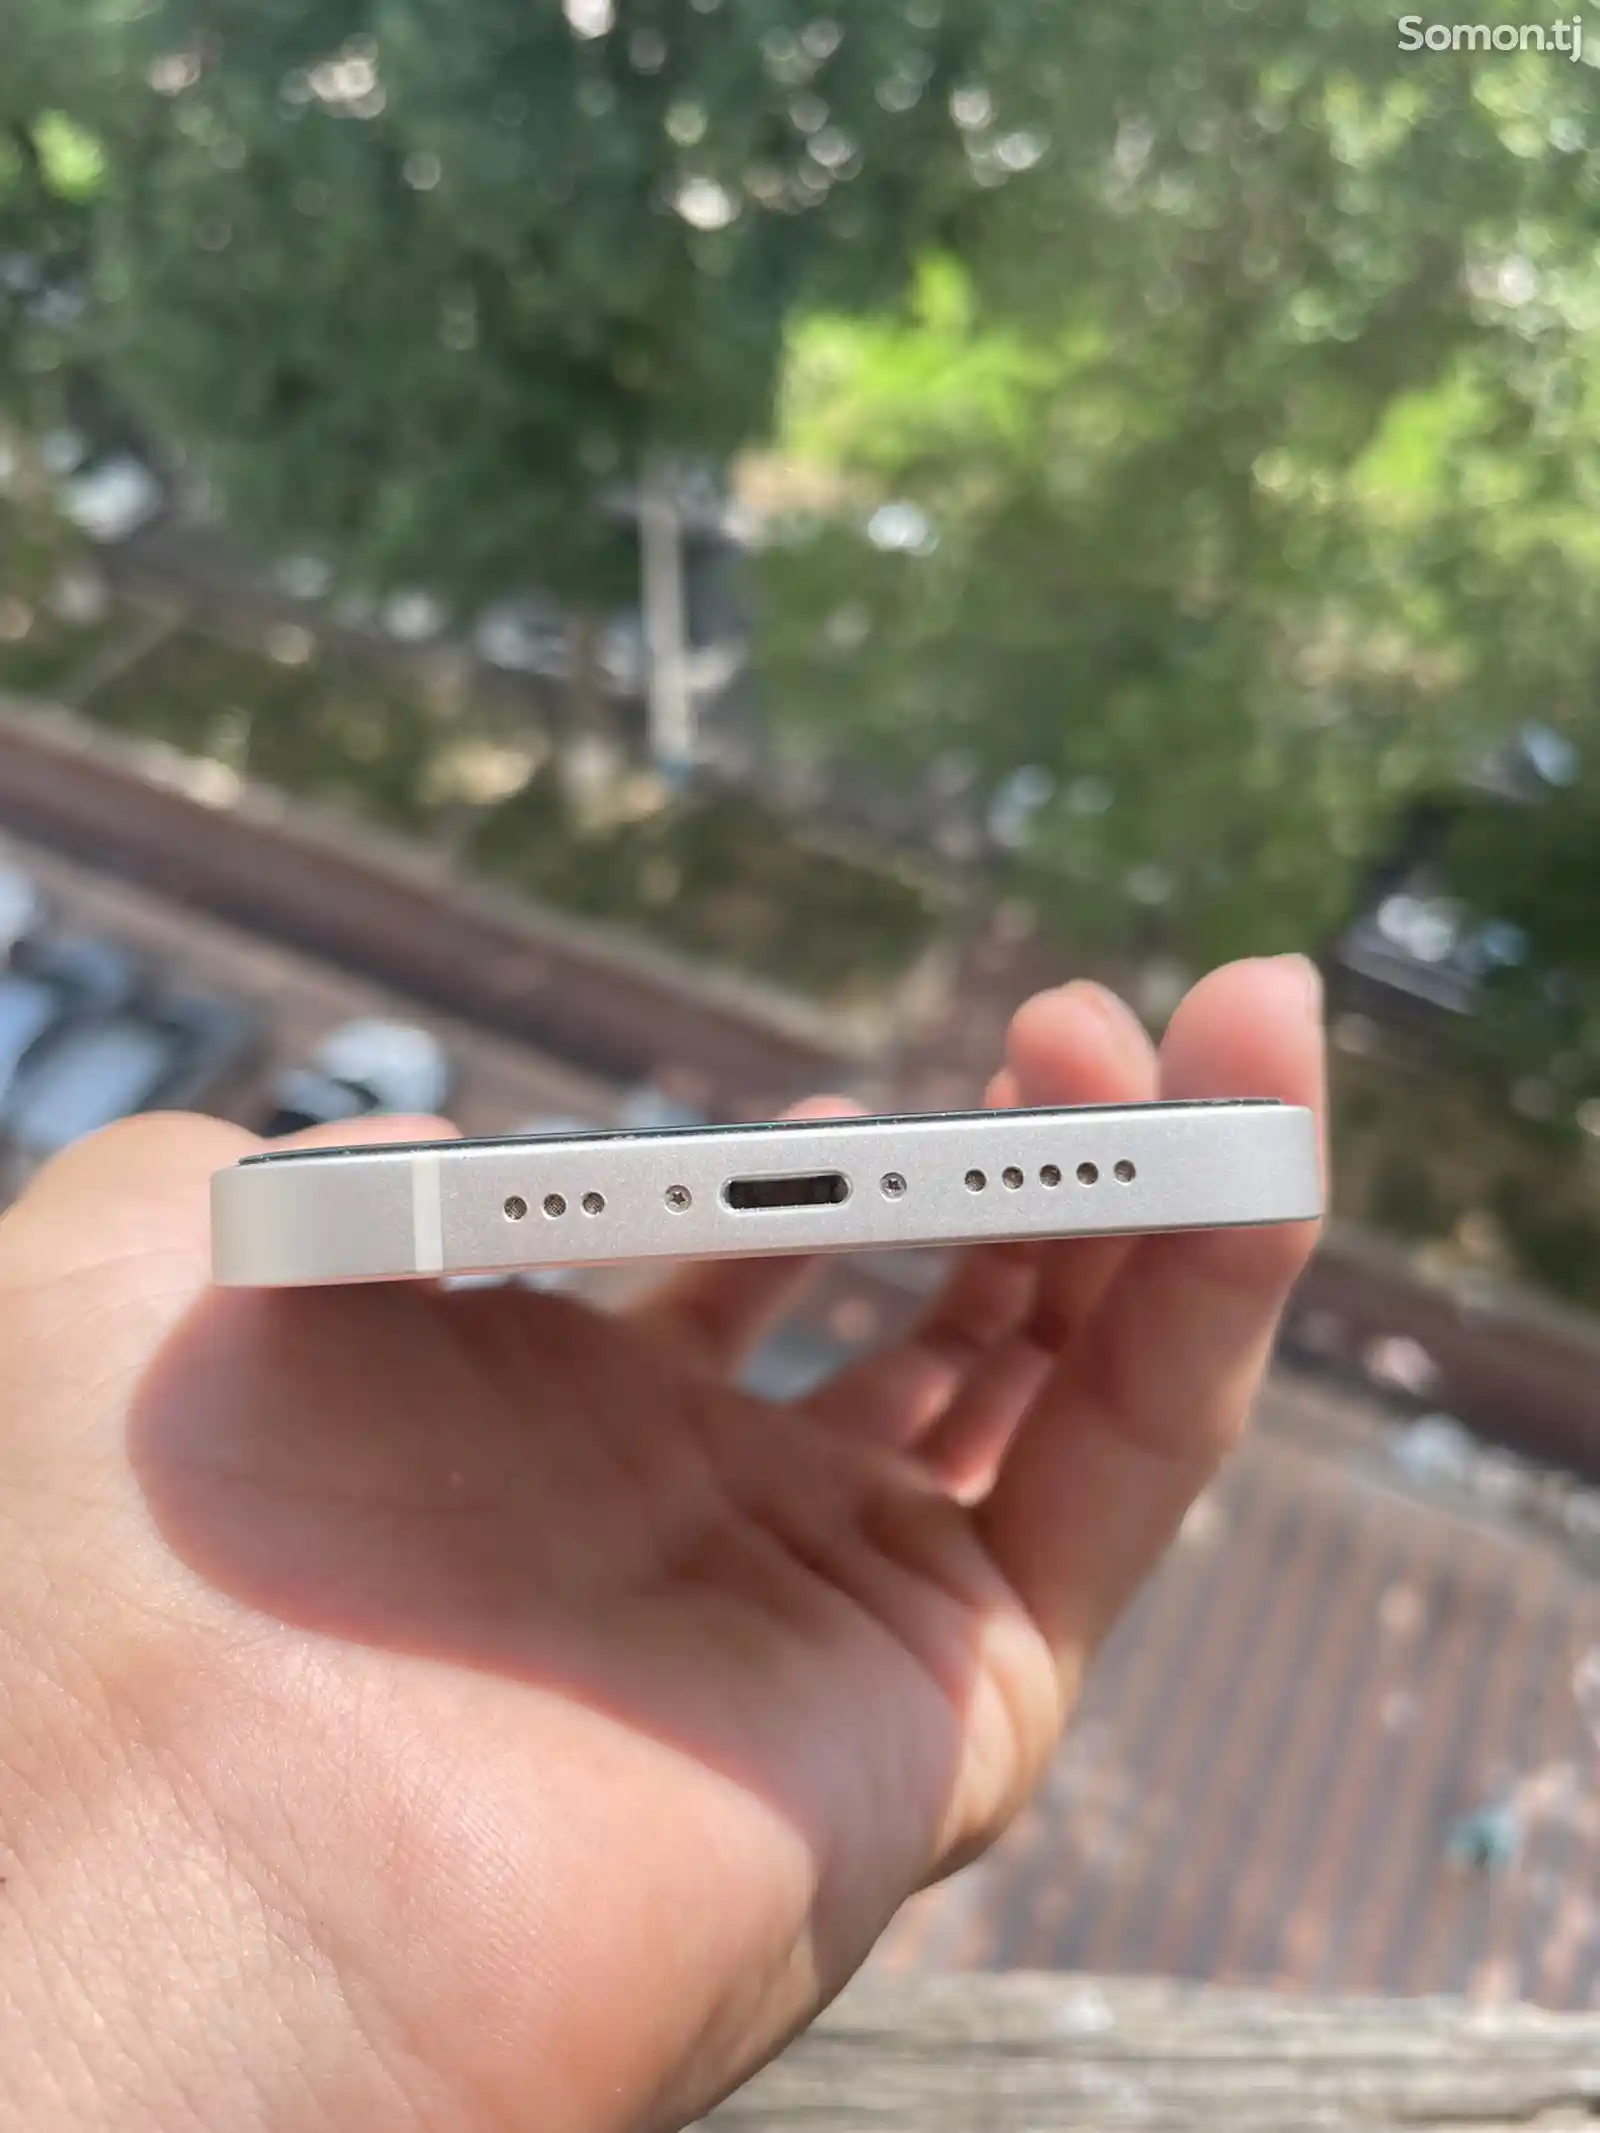 Apple iPhone 12, 64 gb, White-4